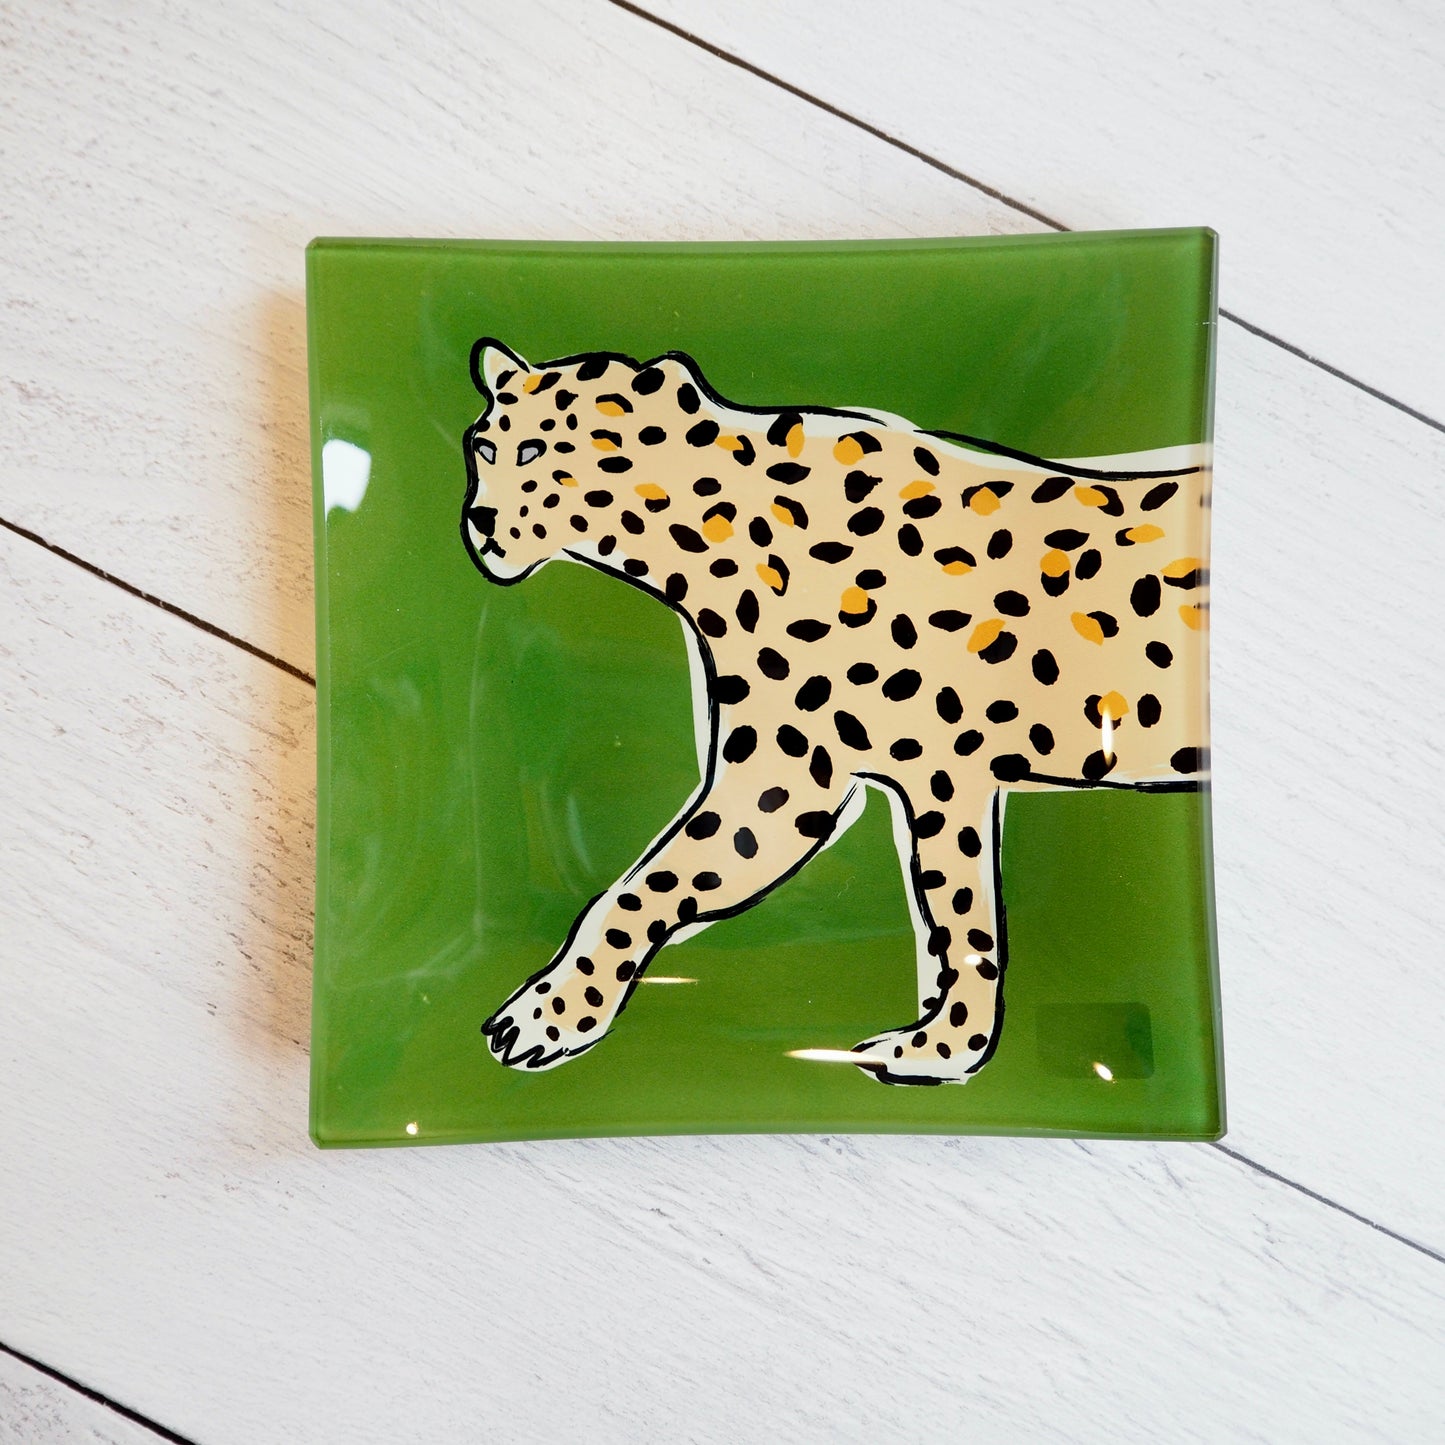 Green Square Cheetah Glass Tray